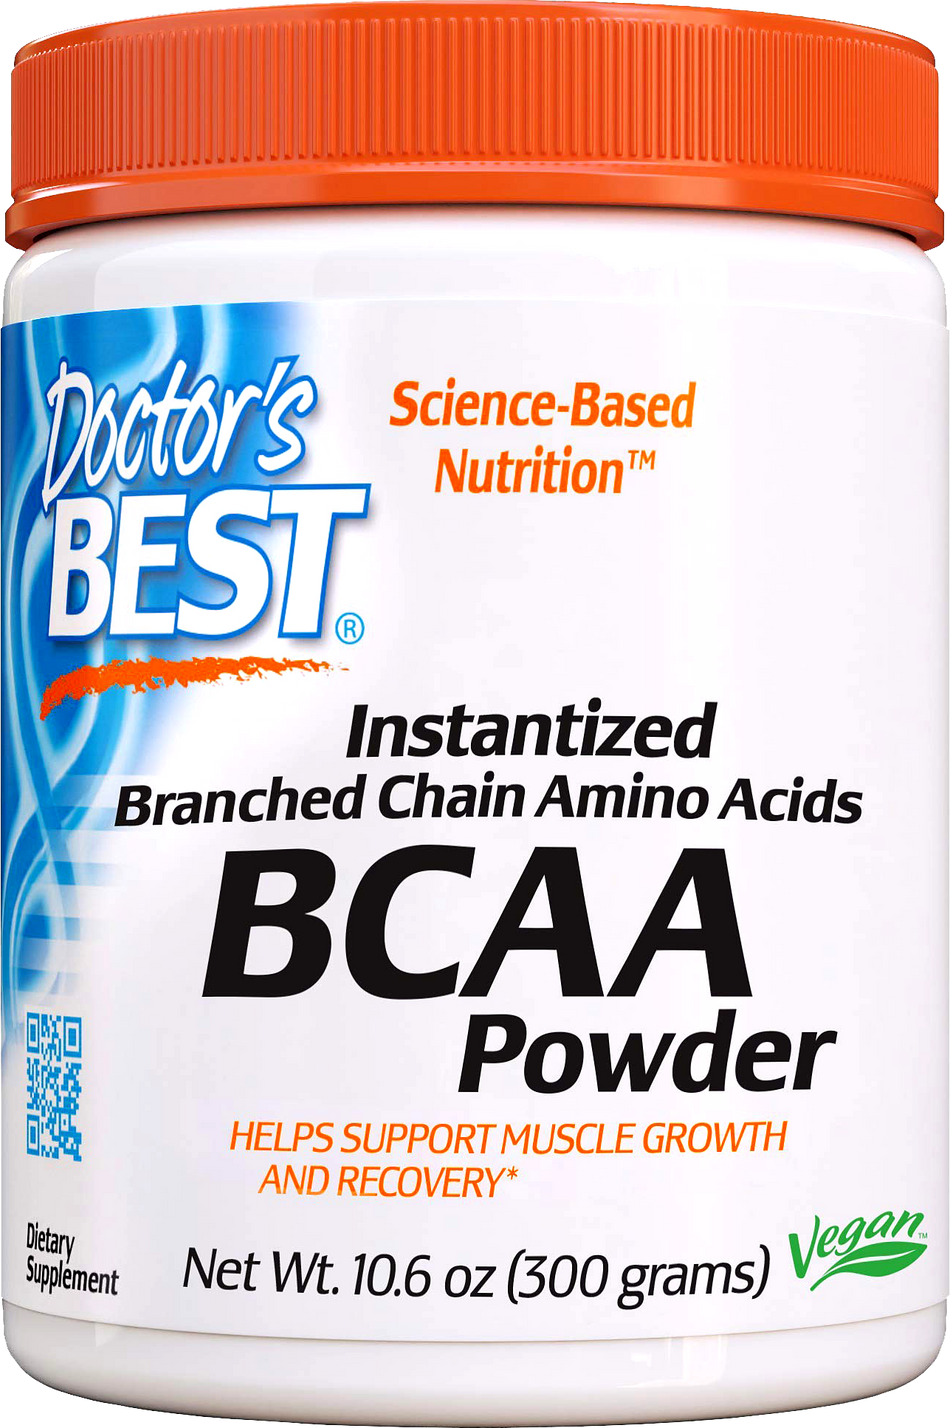 Best BCAA Powder - BadiZdrav.BG